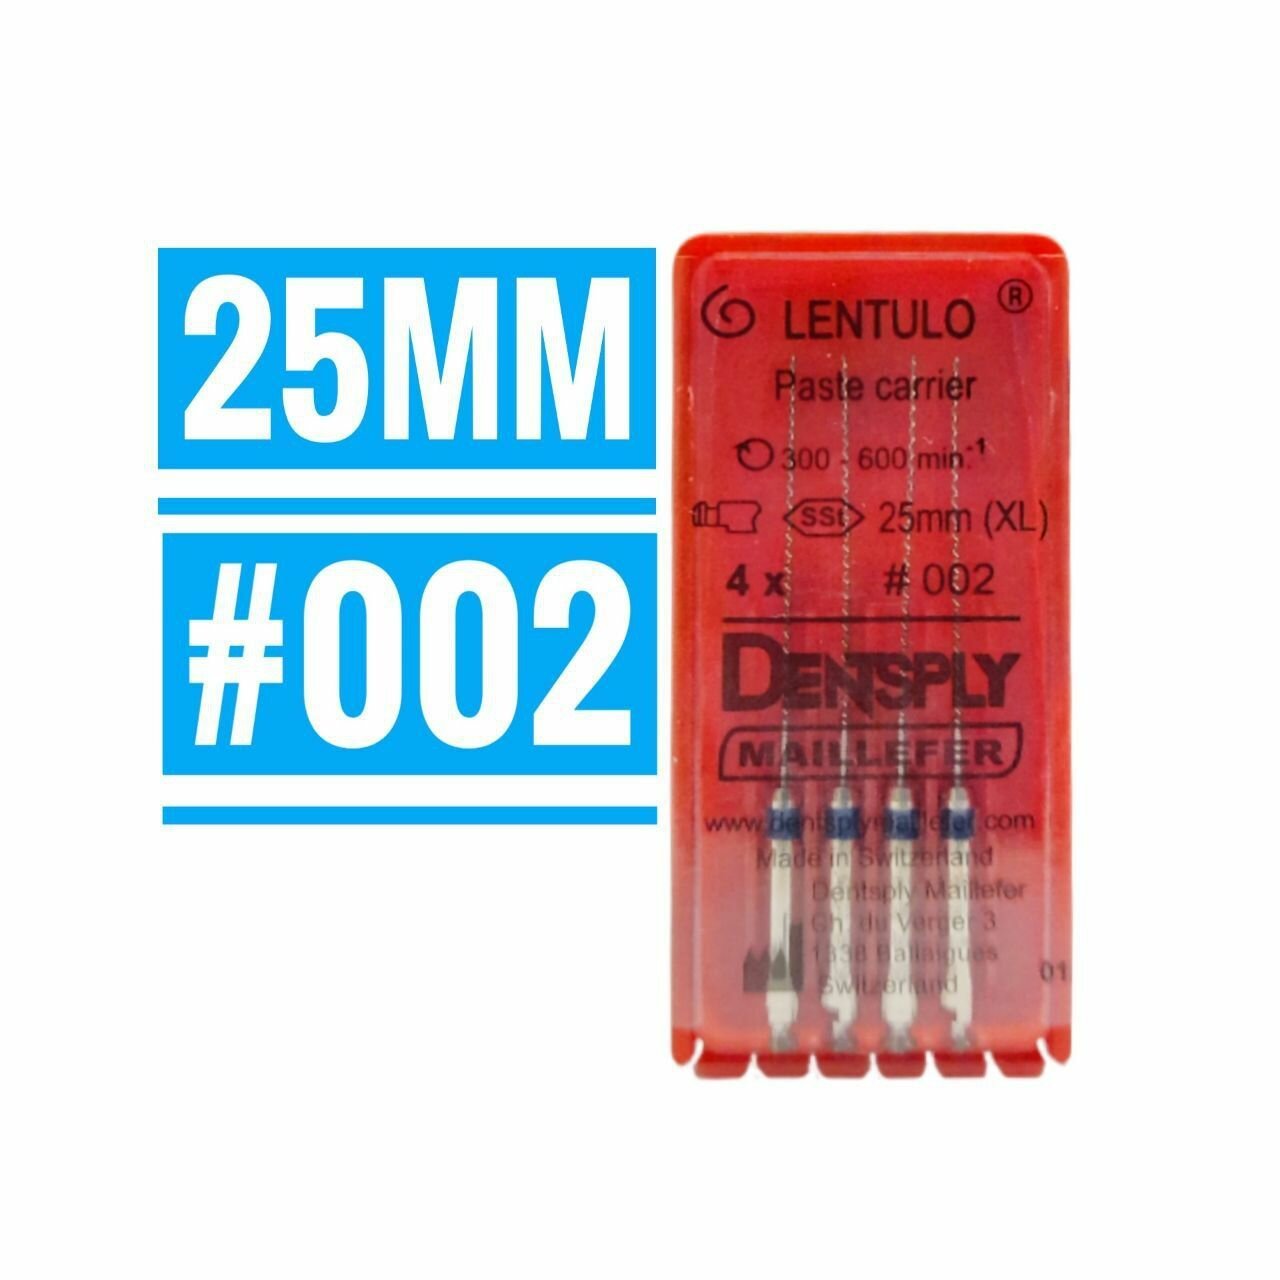 Paste Carriers Lentulo - каналонаполнитель машинный. N002 L25 (ISO 30-90) от Dentsply Maillefer, длина 25, 4 шт/ упак, DevonHealth.